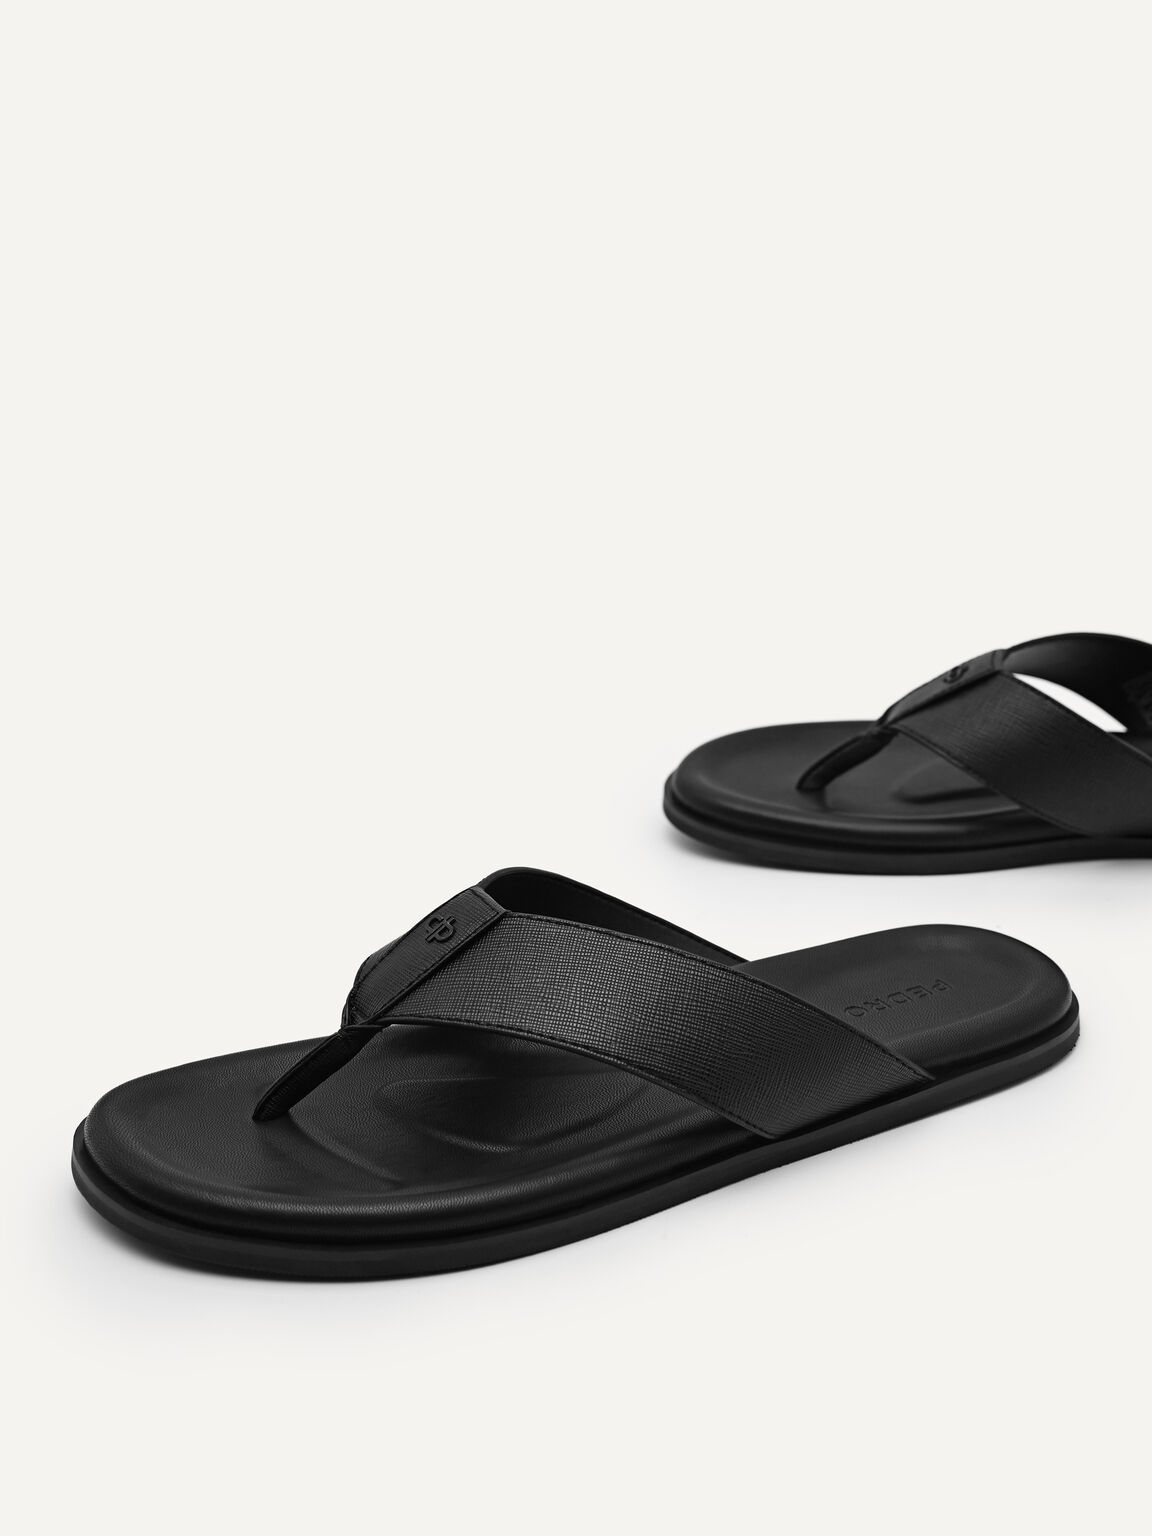 PEDRO Icon Thong Sandals, Black, hi-res